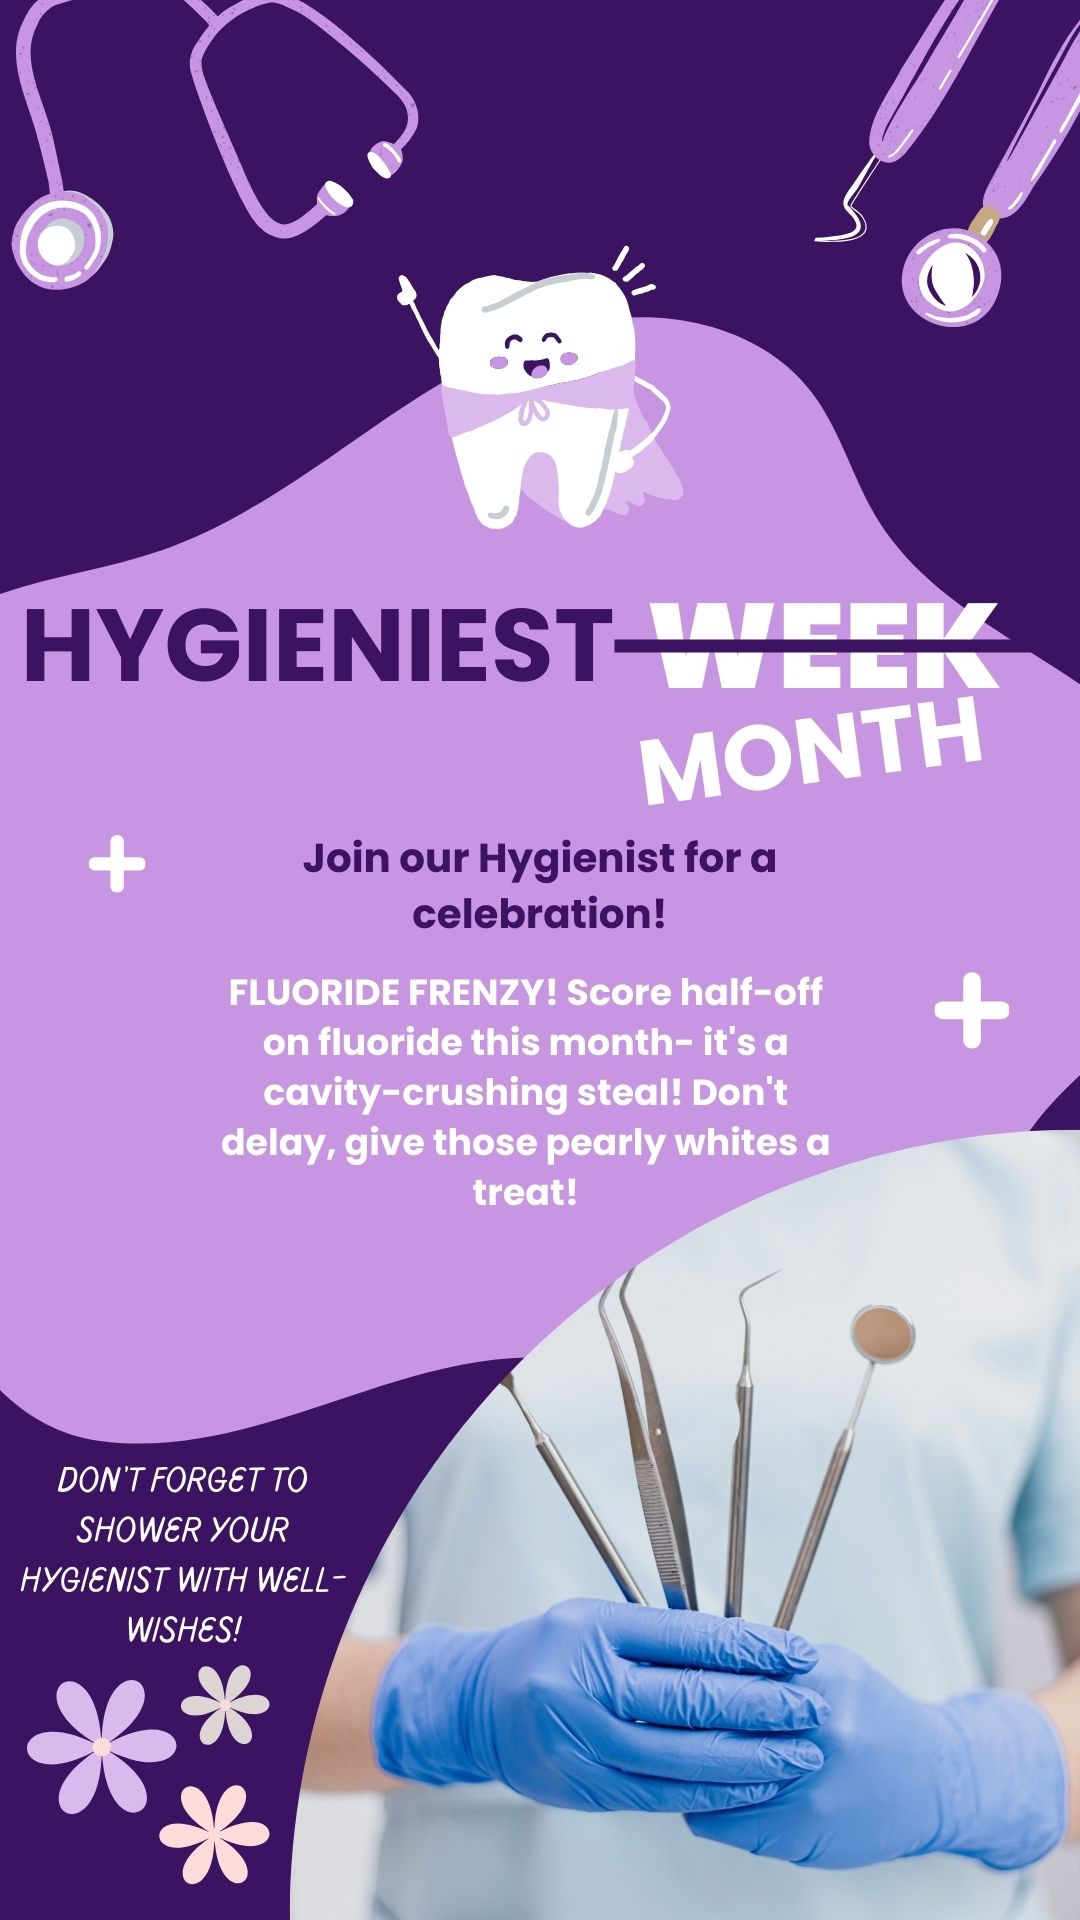 Hygienist week flyer